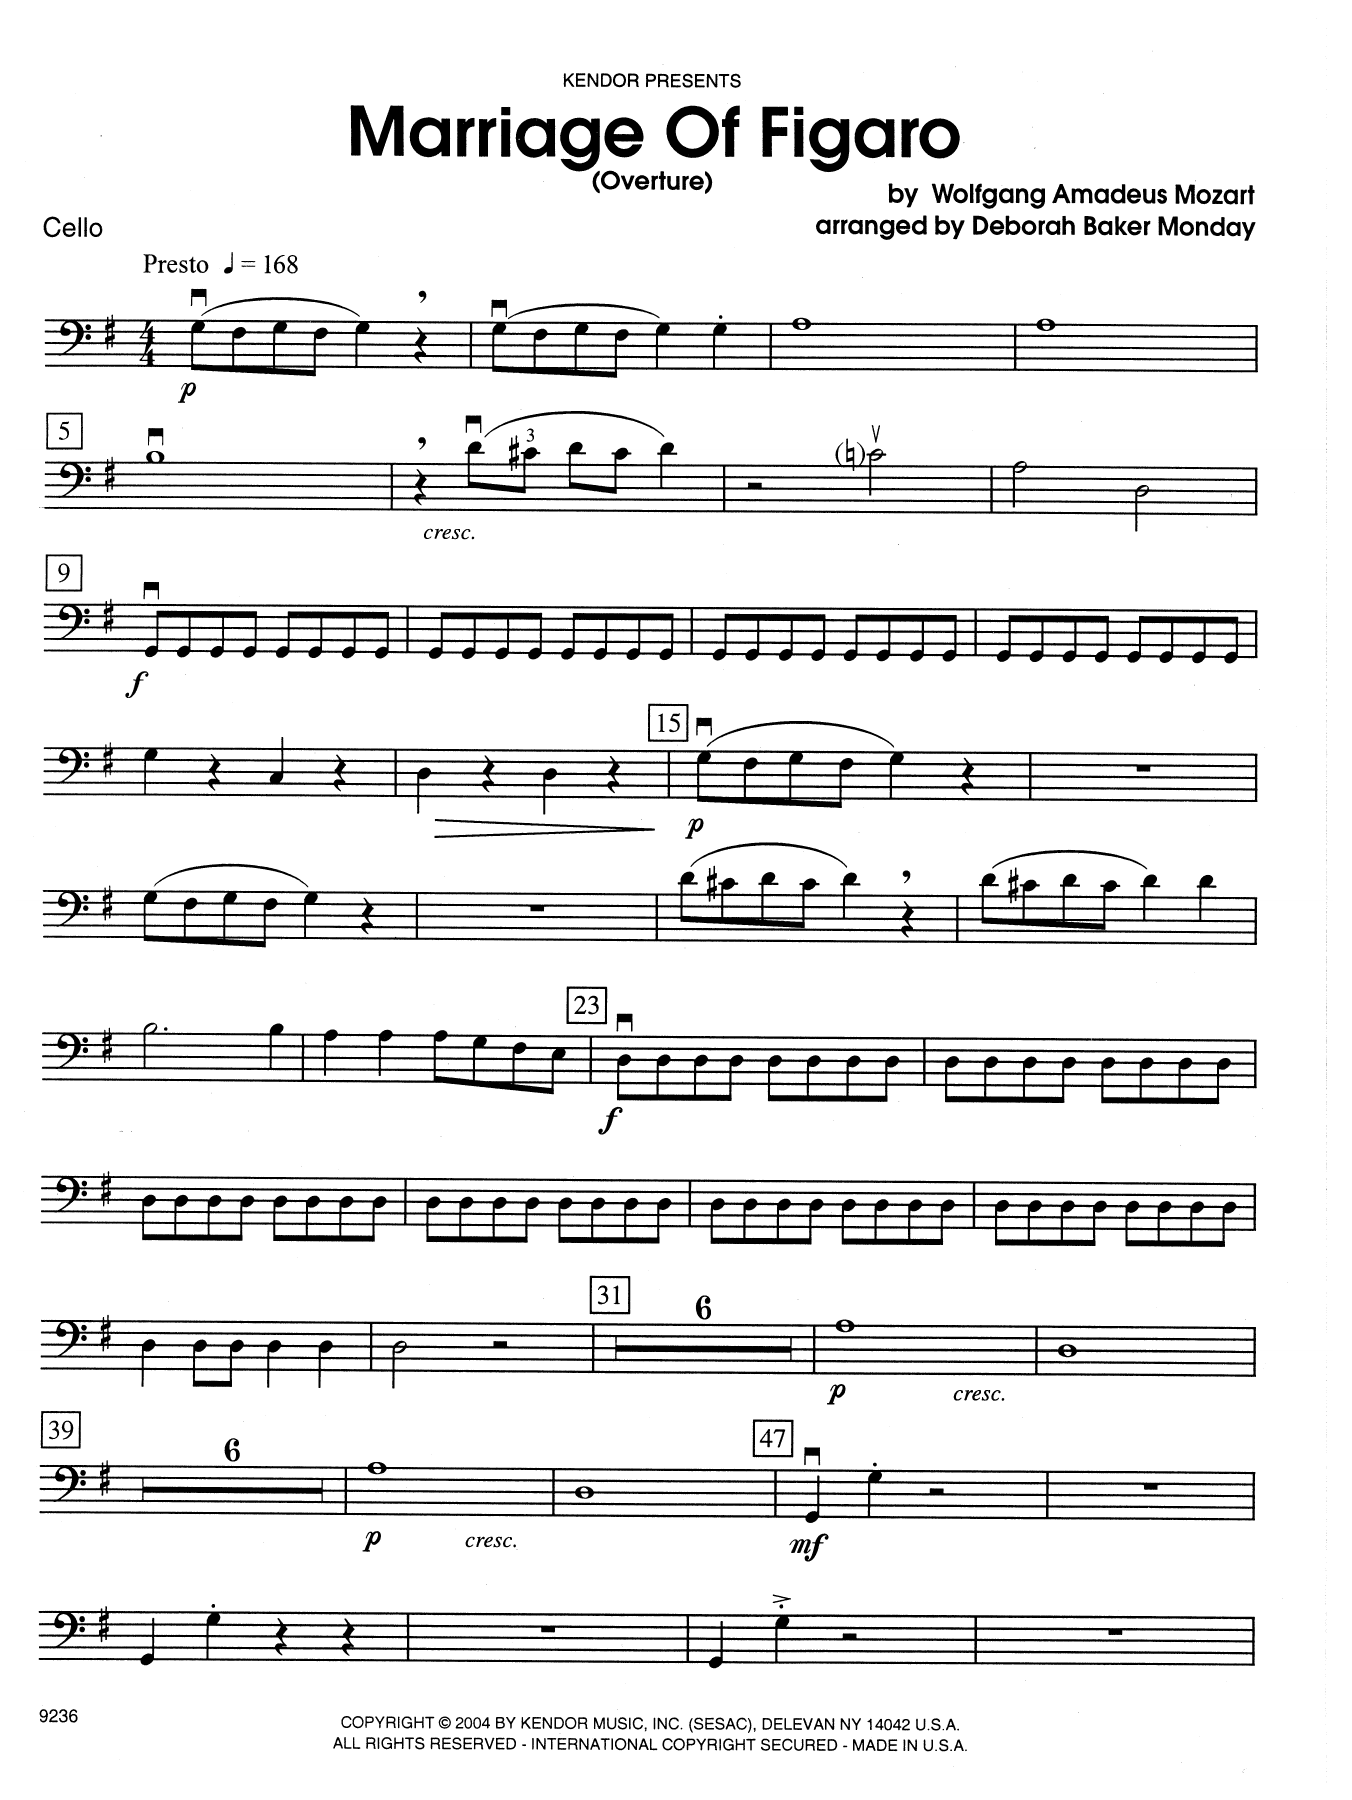 Download Deborah Baker Monday Marriage Of Figaro (Overture) - Cello Sheet Music